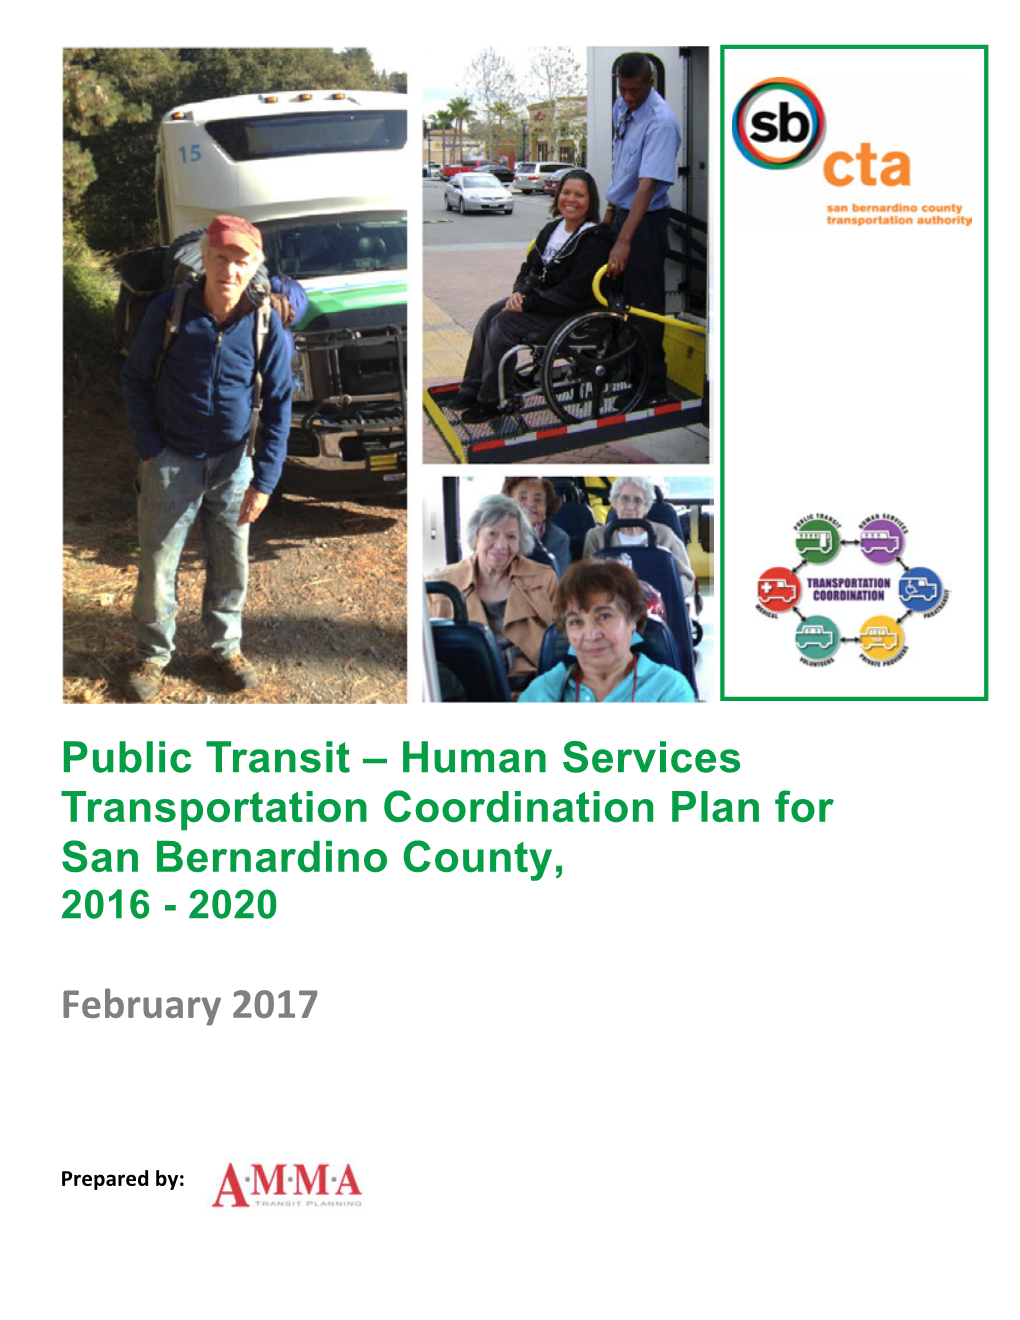 Public Transit – Human Services Transportation Coordination Plan for San Bernardino County, 2016 - 2020